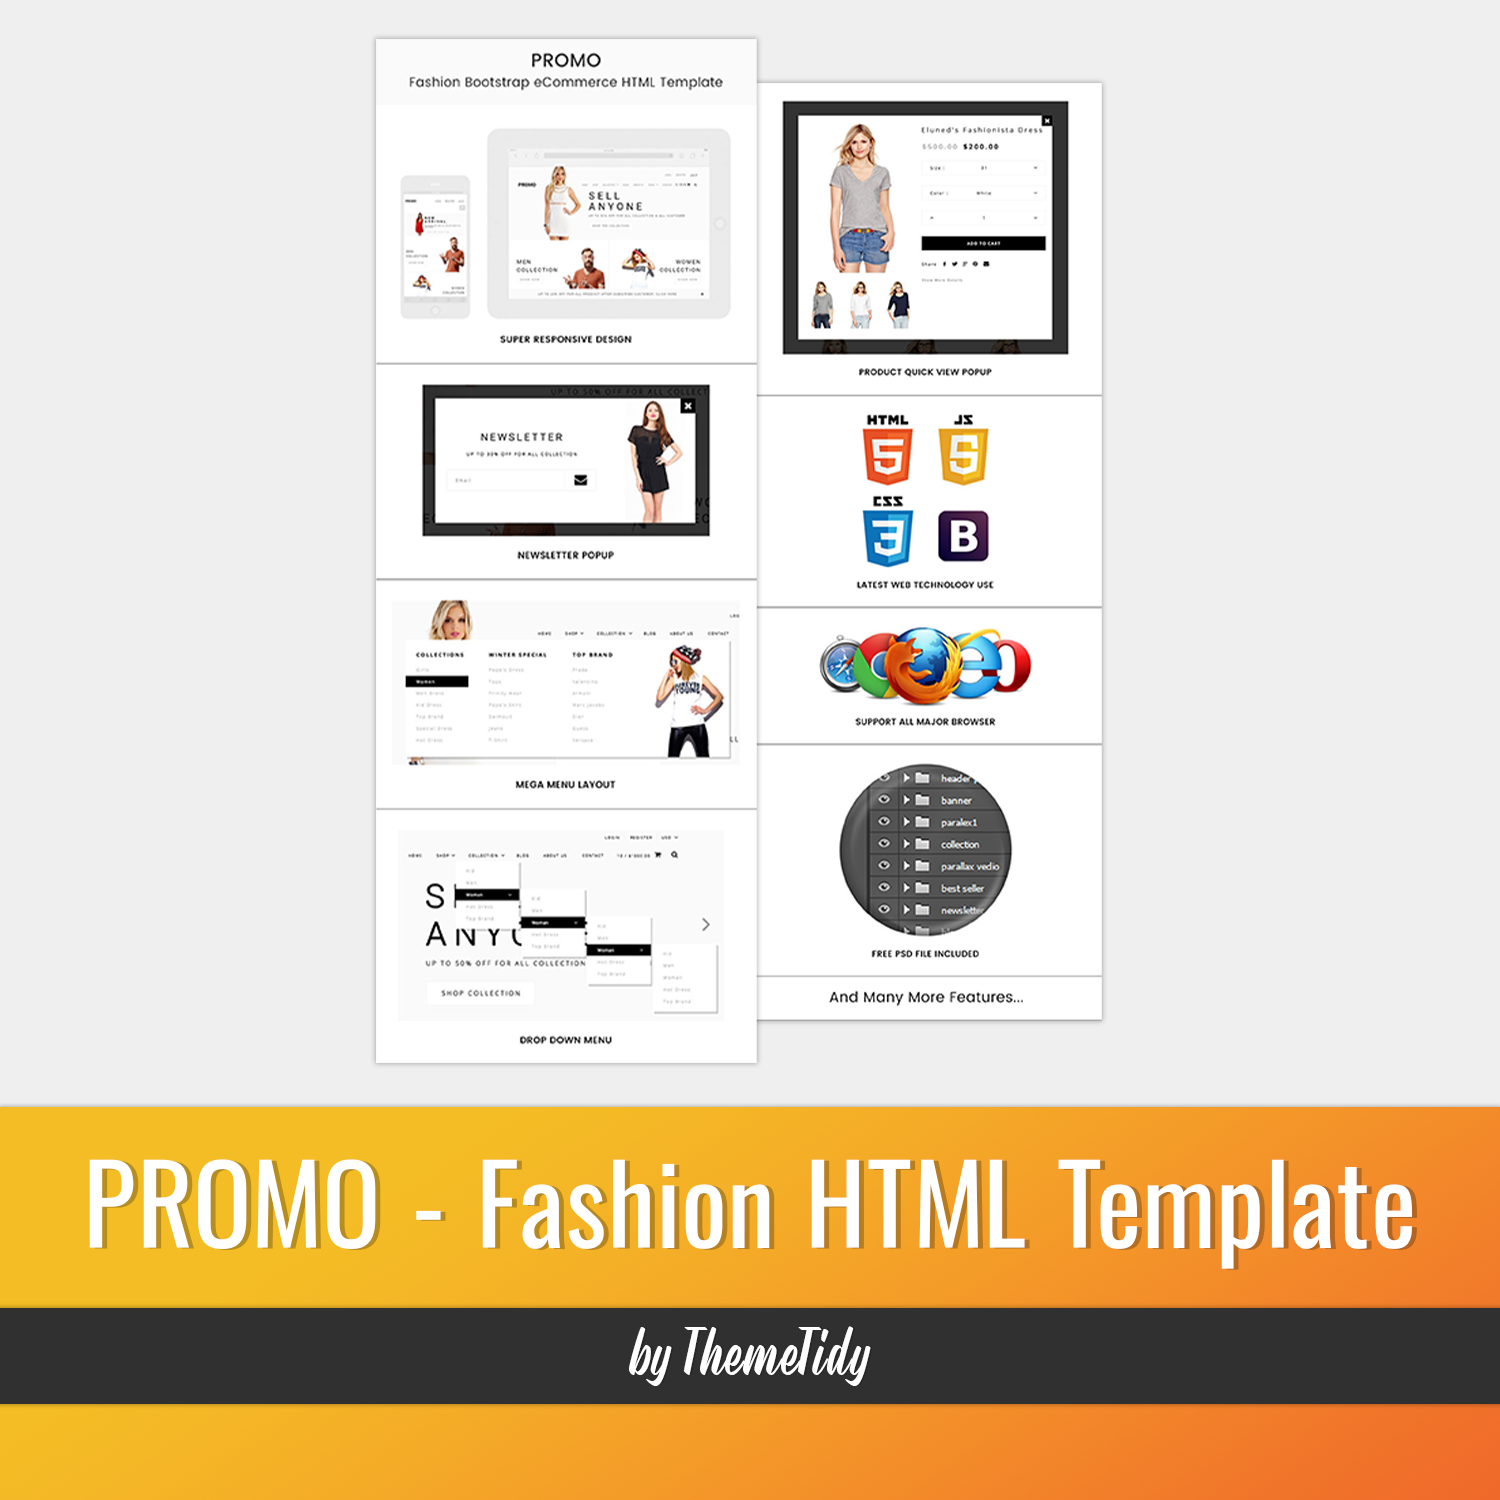 Preview promo fashion html template.